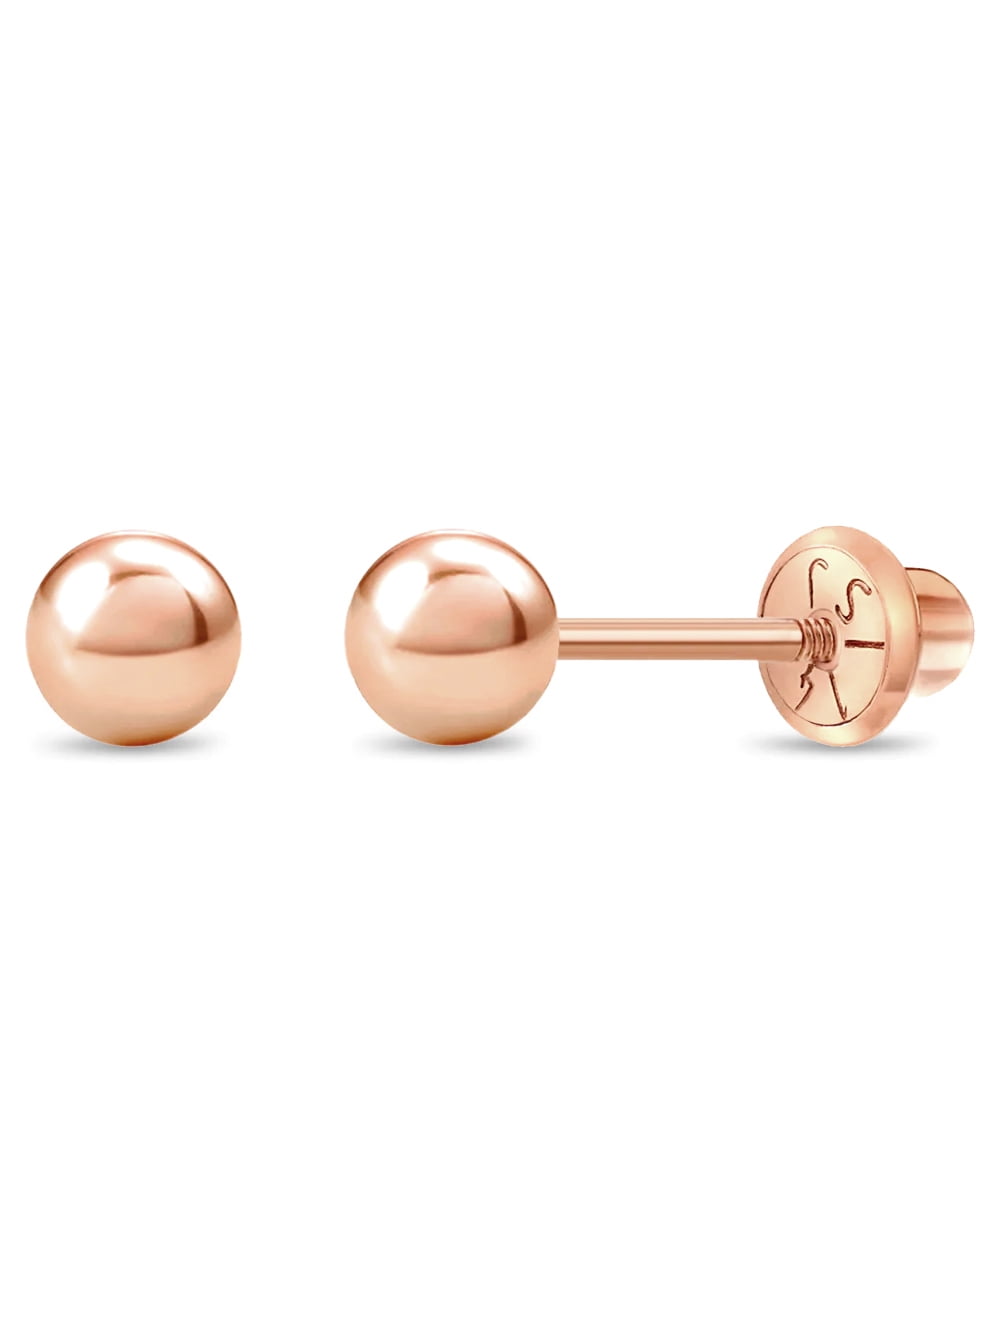 Buy 14K Rose Gold Screw Back Earring Backings Only Online at